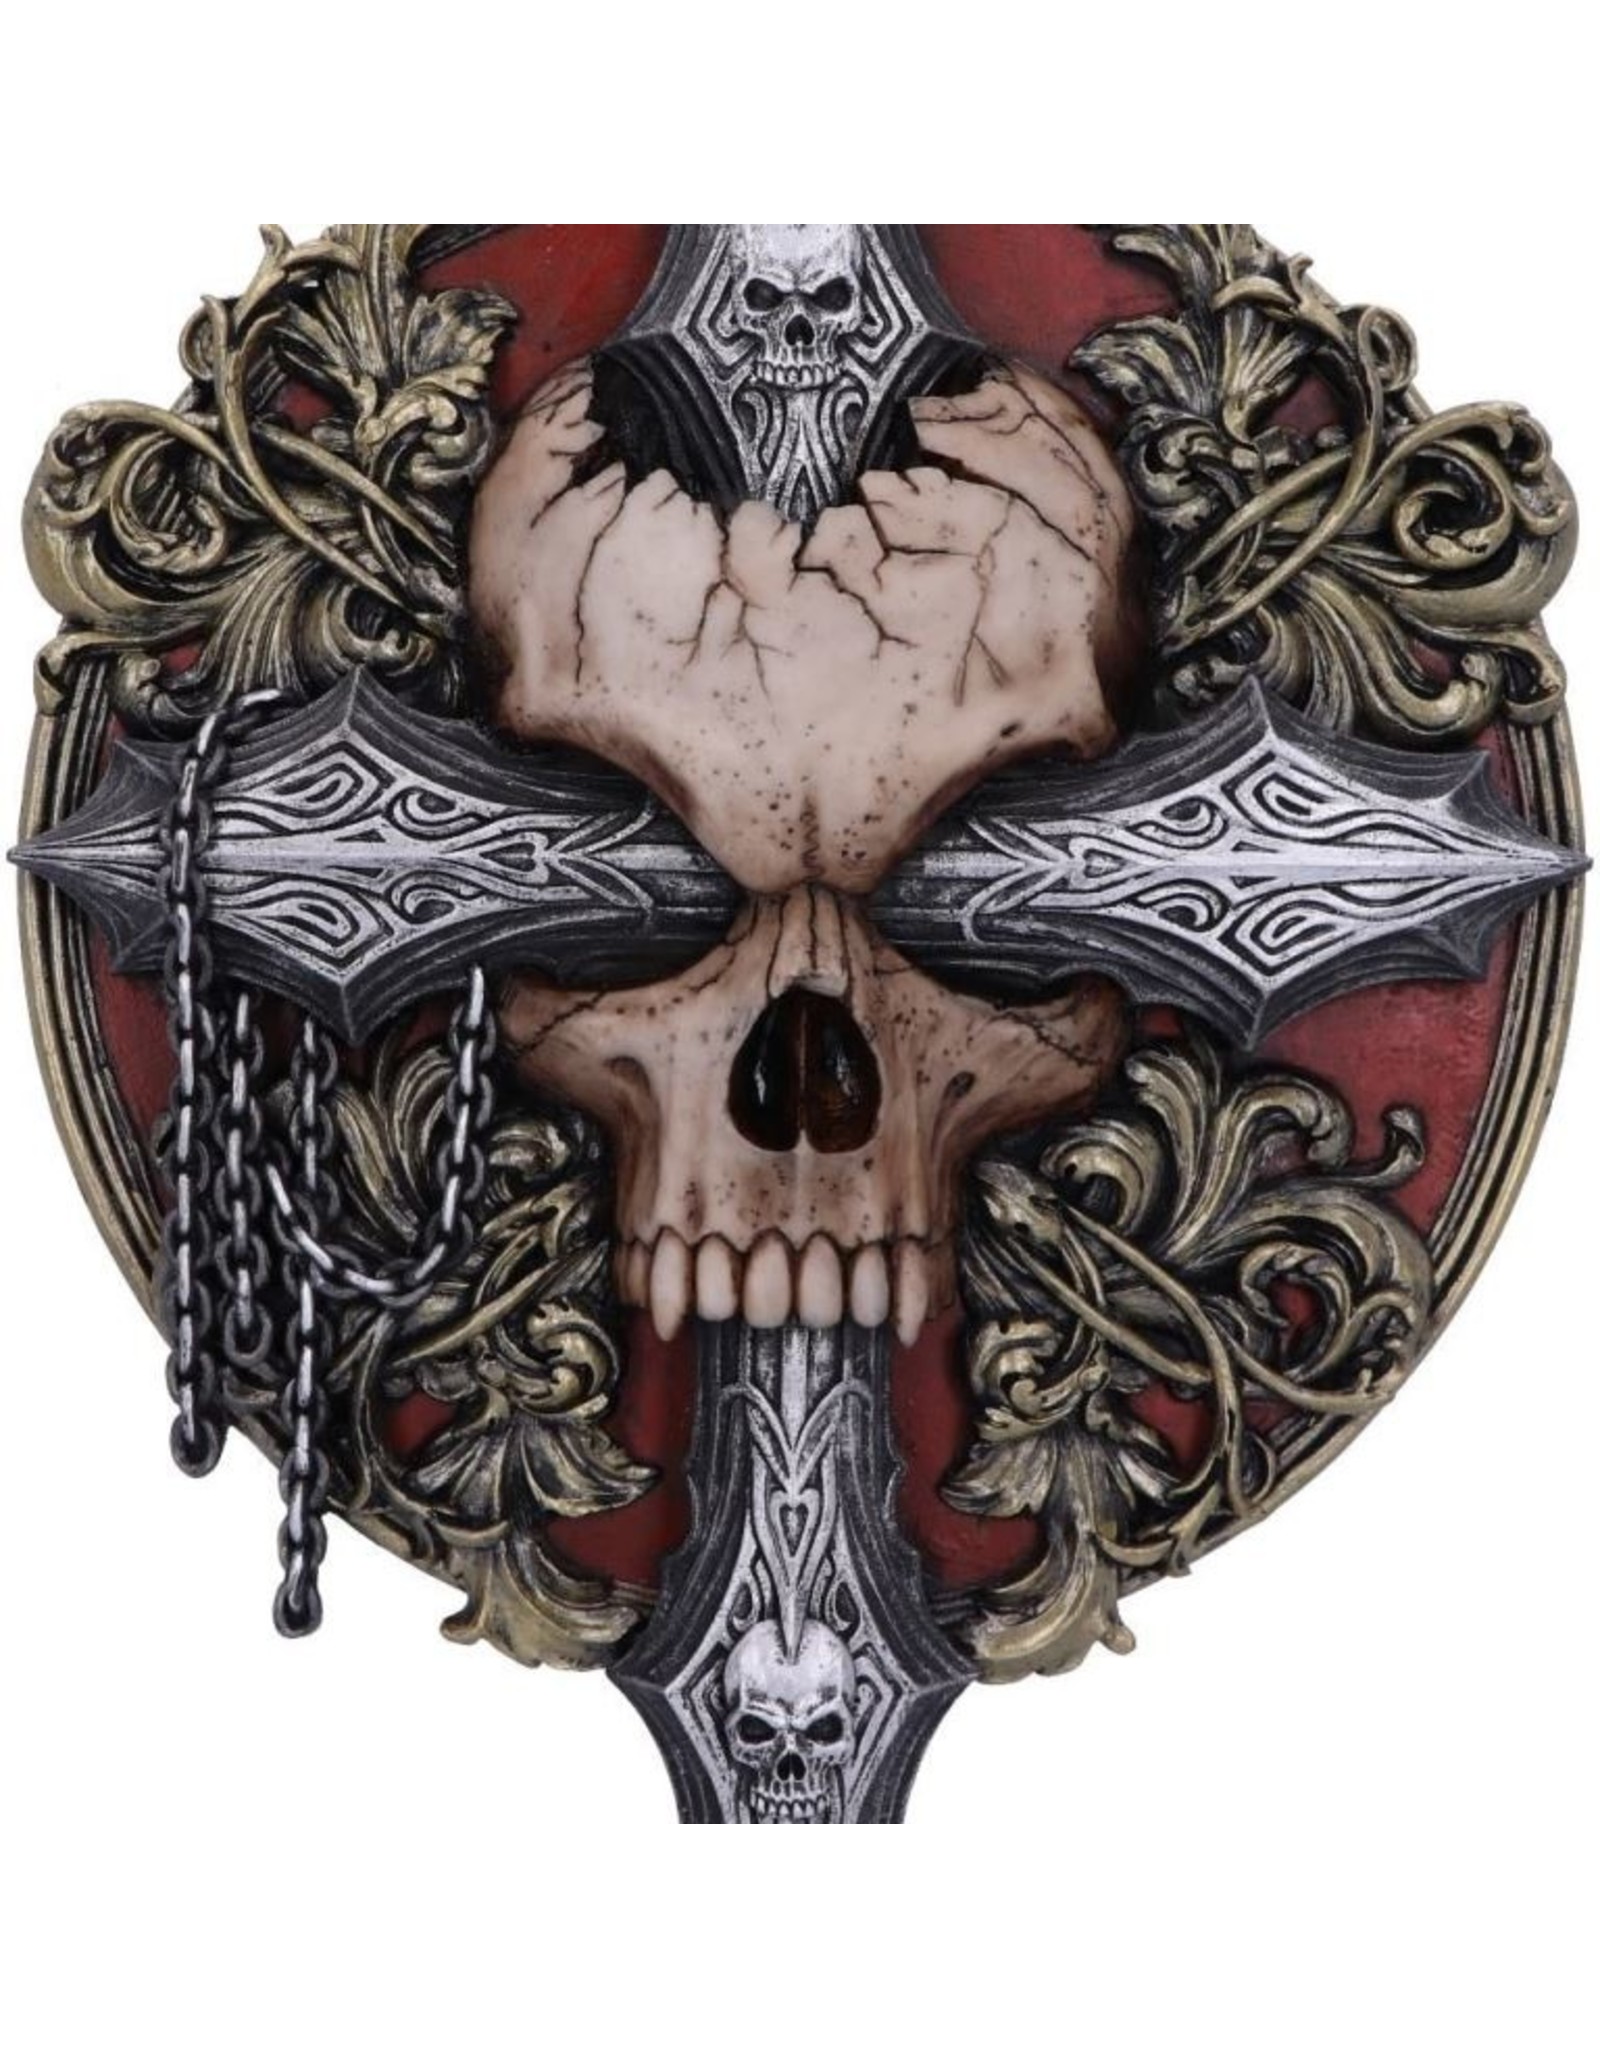 Spiral Direct Giftware & Lifestyle - Cross of Darkness Barok Schedel Wanddecoratie - Spiraal